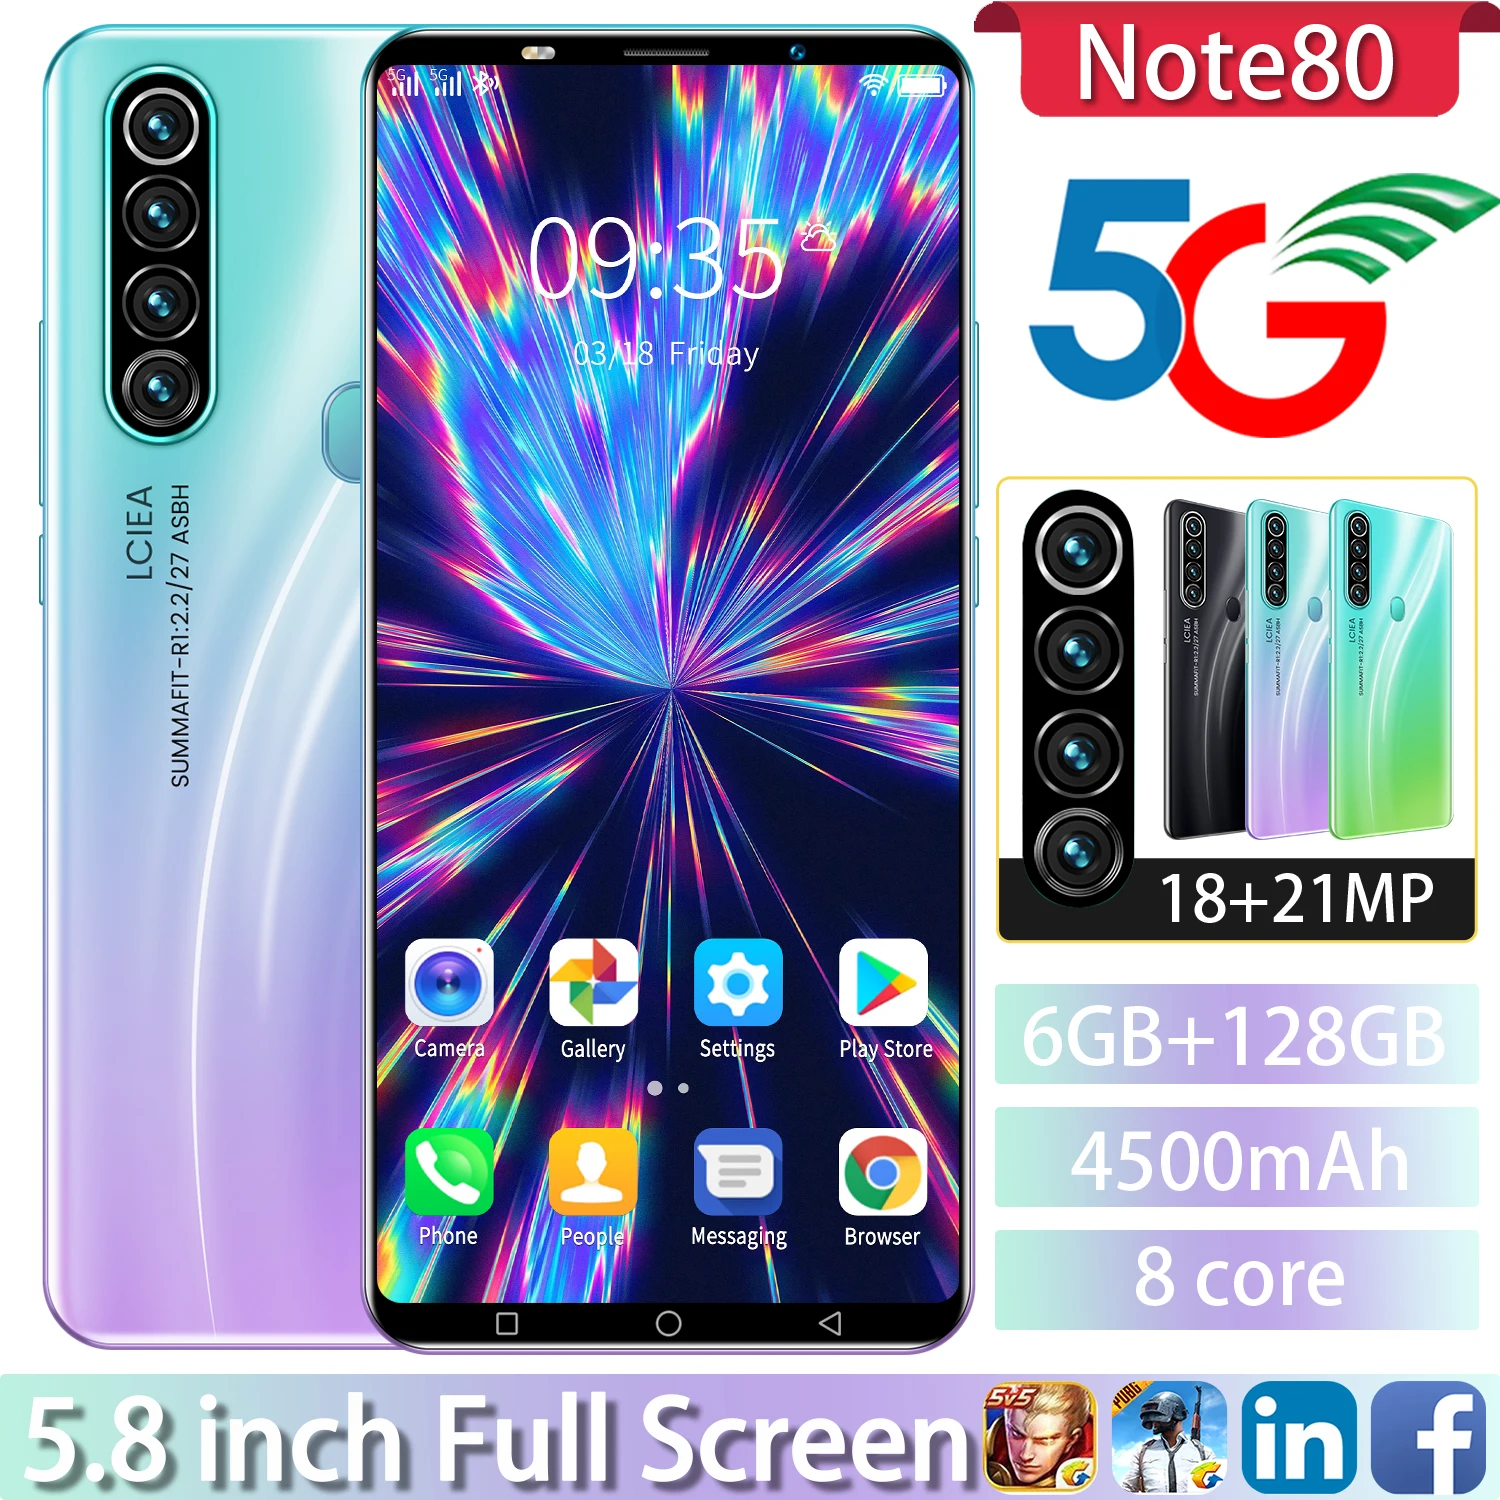 New 2021 Note80 6+128GB 4500mAh Andriod 10.0 MTK6898 Smart Phone 5.8 Inch 8 Core Dual SIM Fingerprint Face ID Mobile Phone